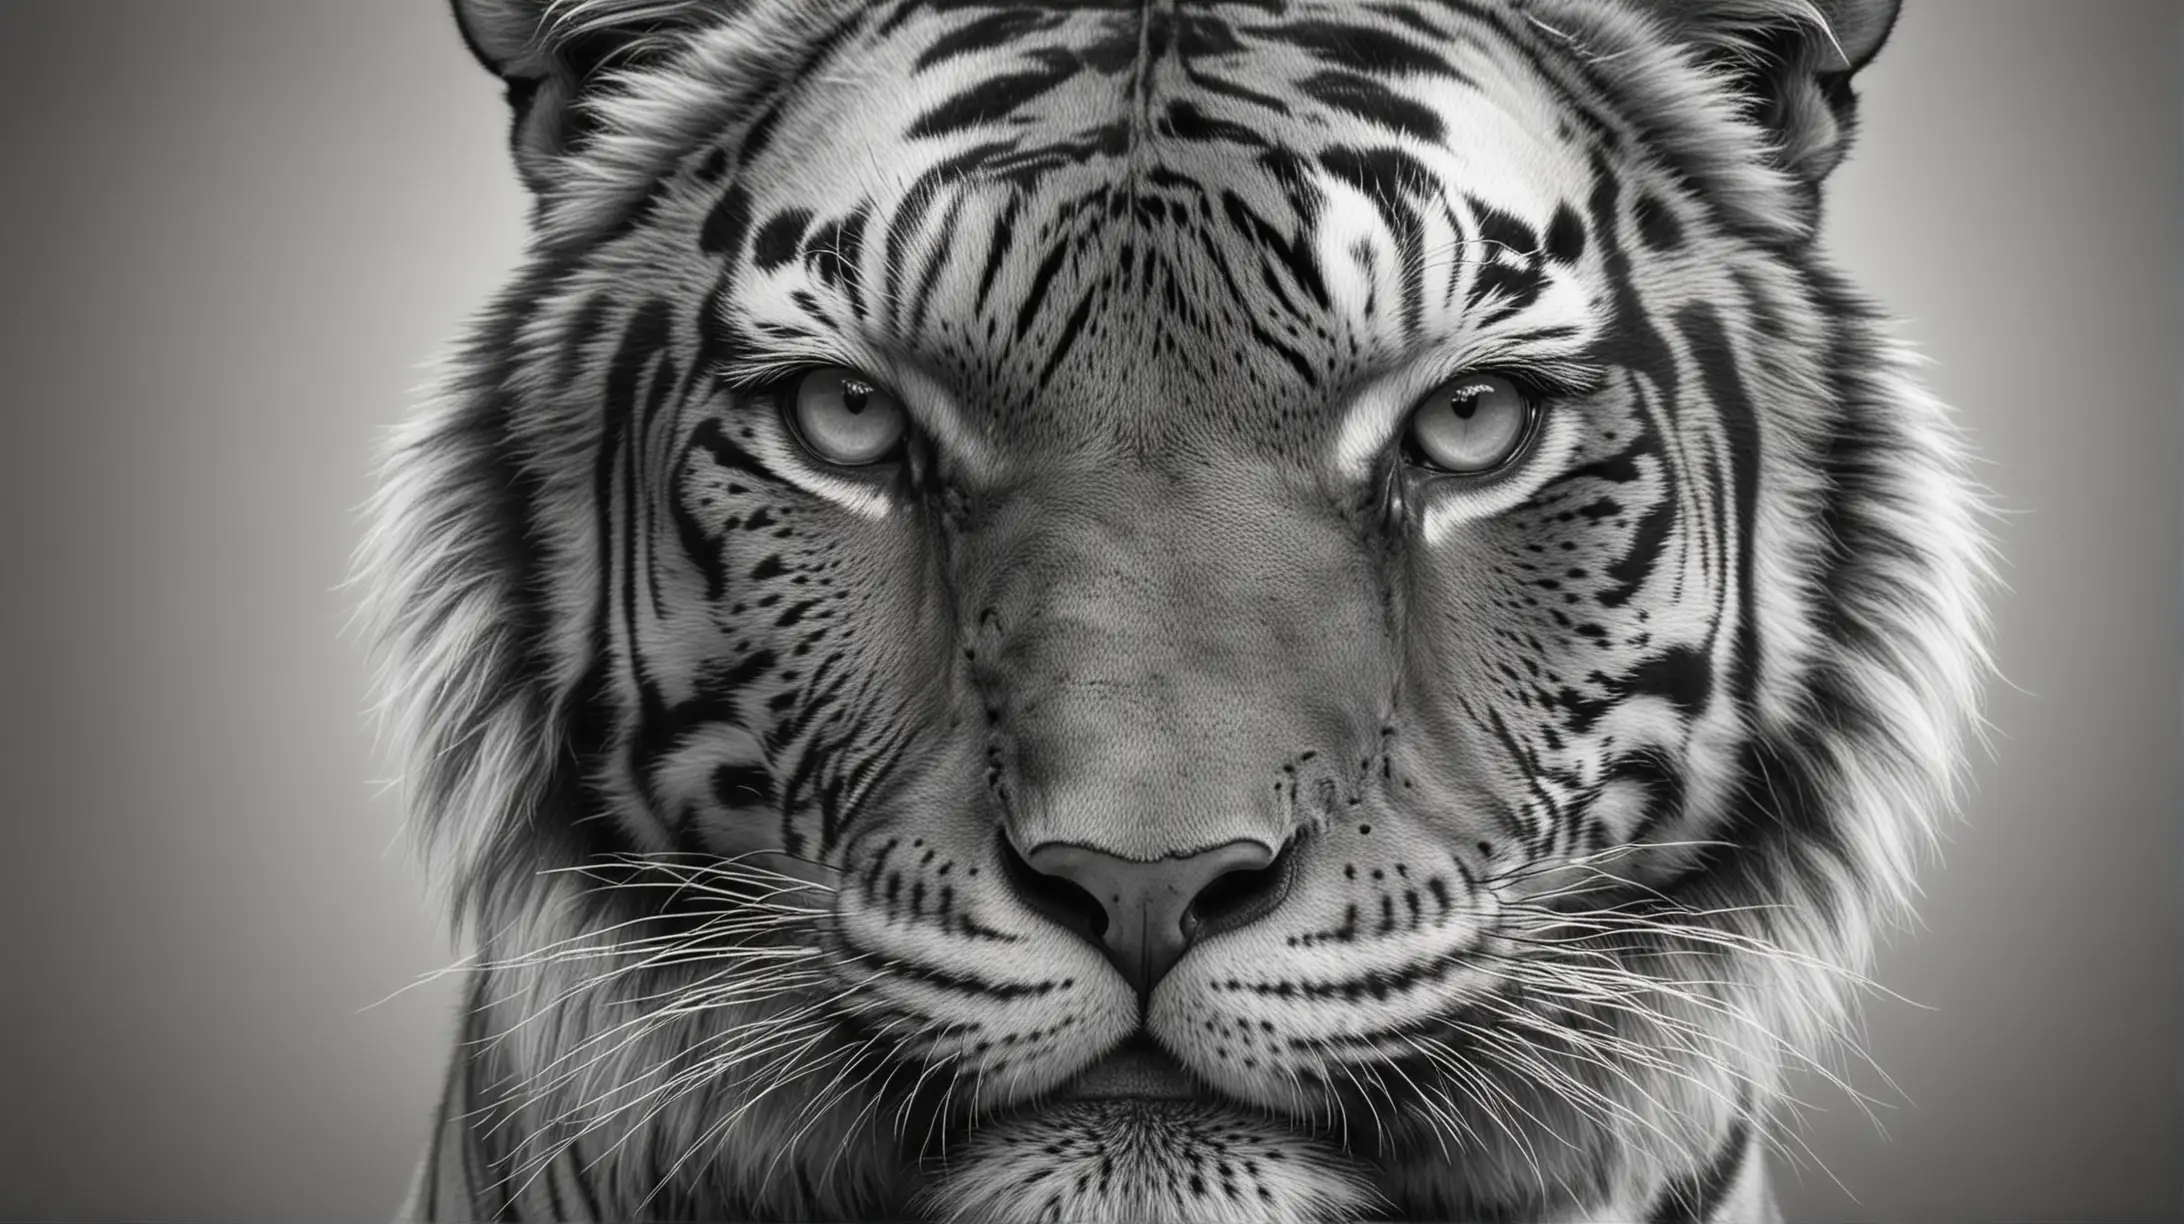 Majestic Tiger Portrait HyperRealistic Black and White Tiger Head